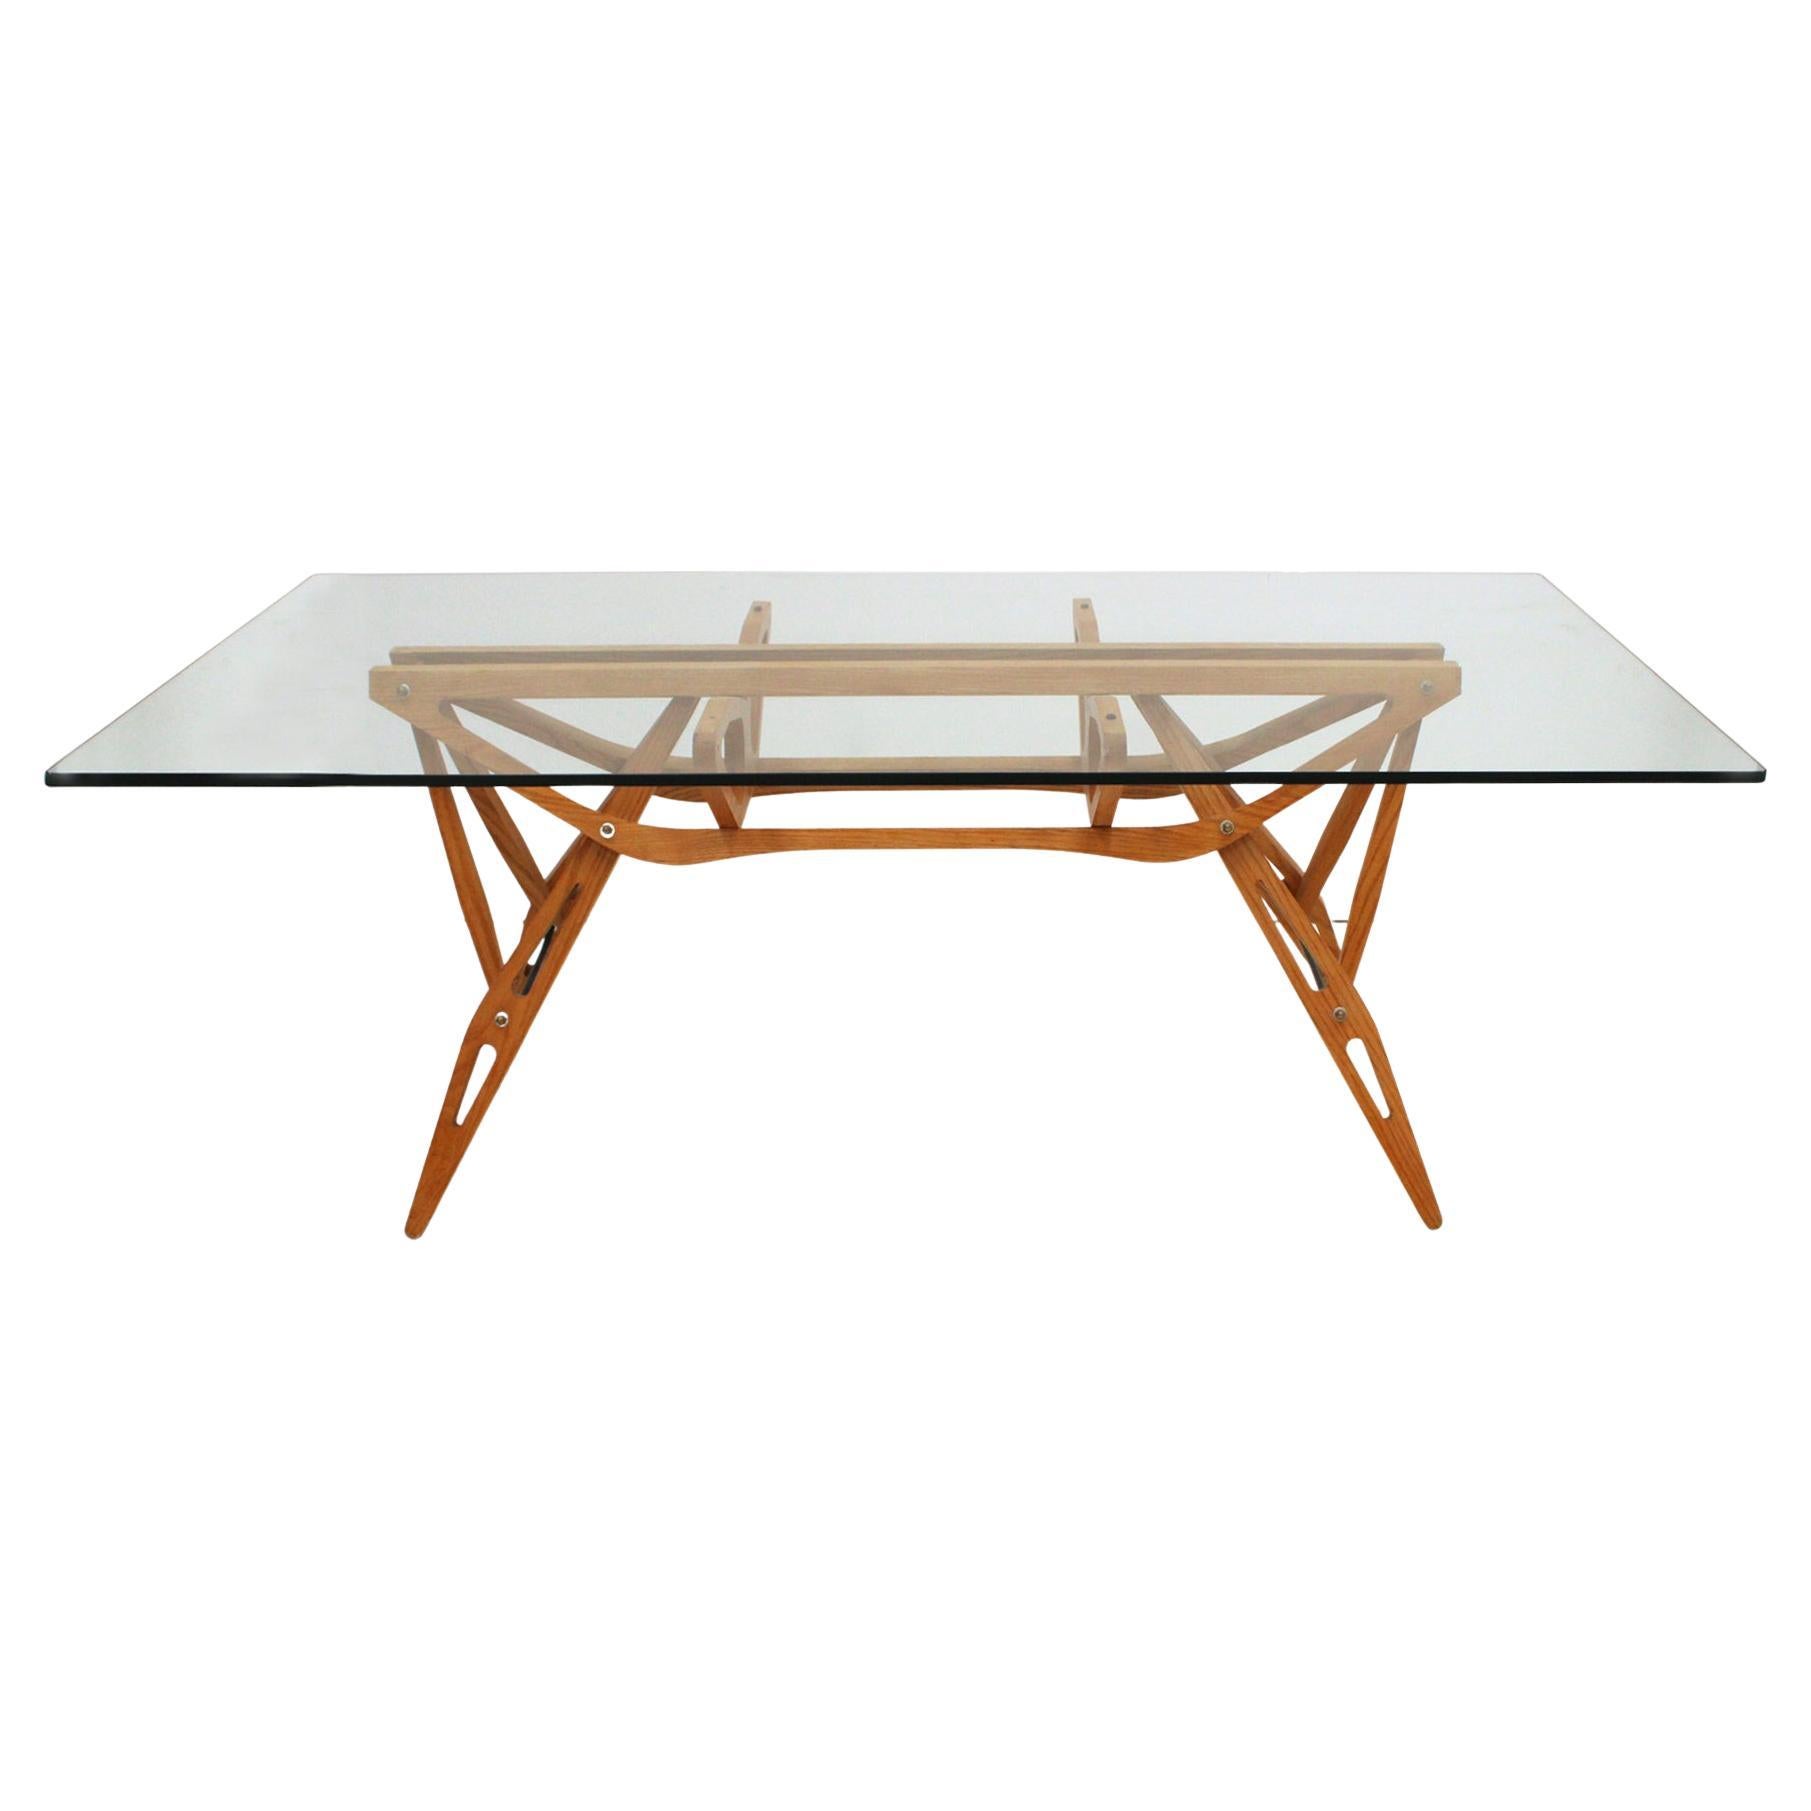 Carlo Mollino Mid-Century Modern Reale Square Italian Table Made of Oak Wood For Sale